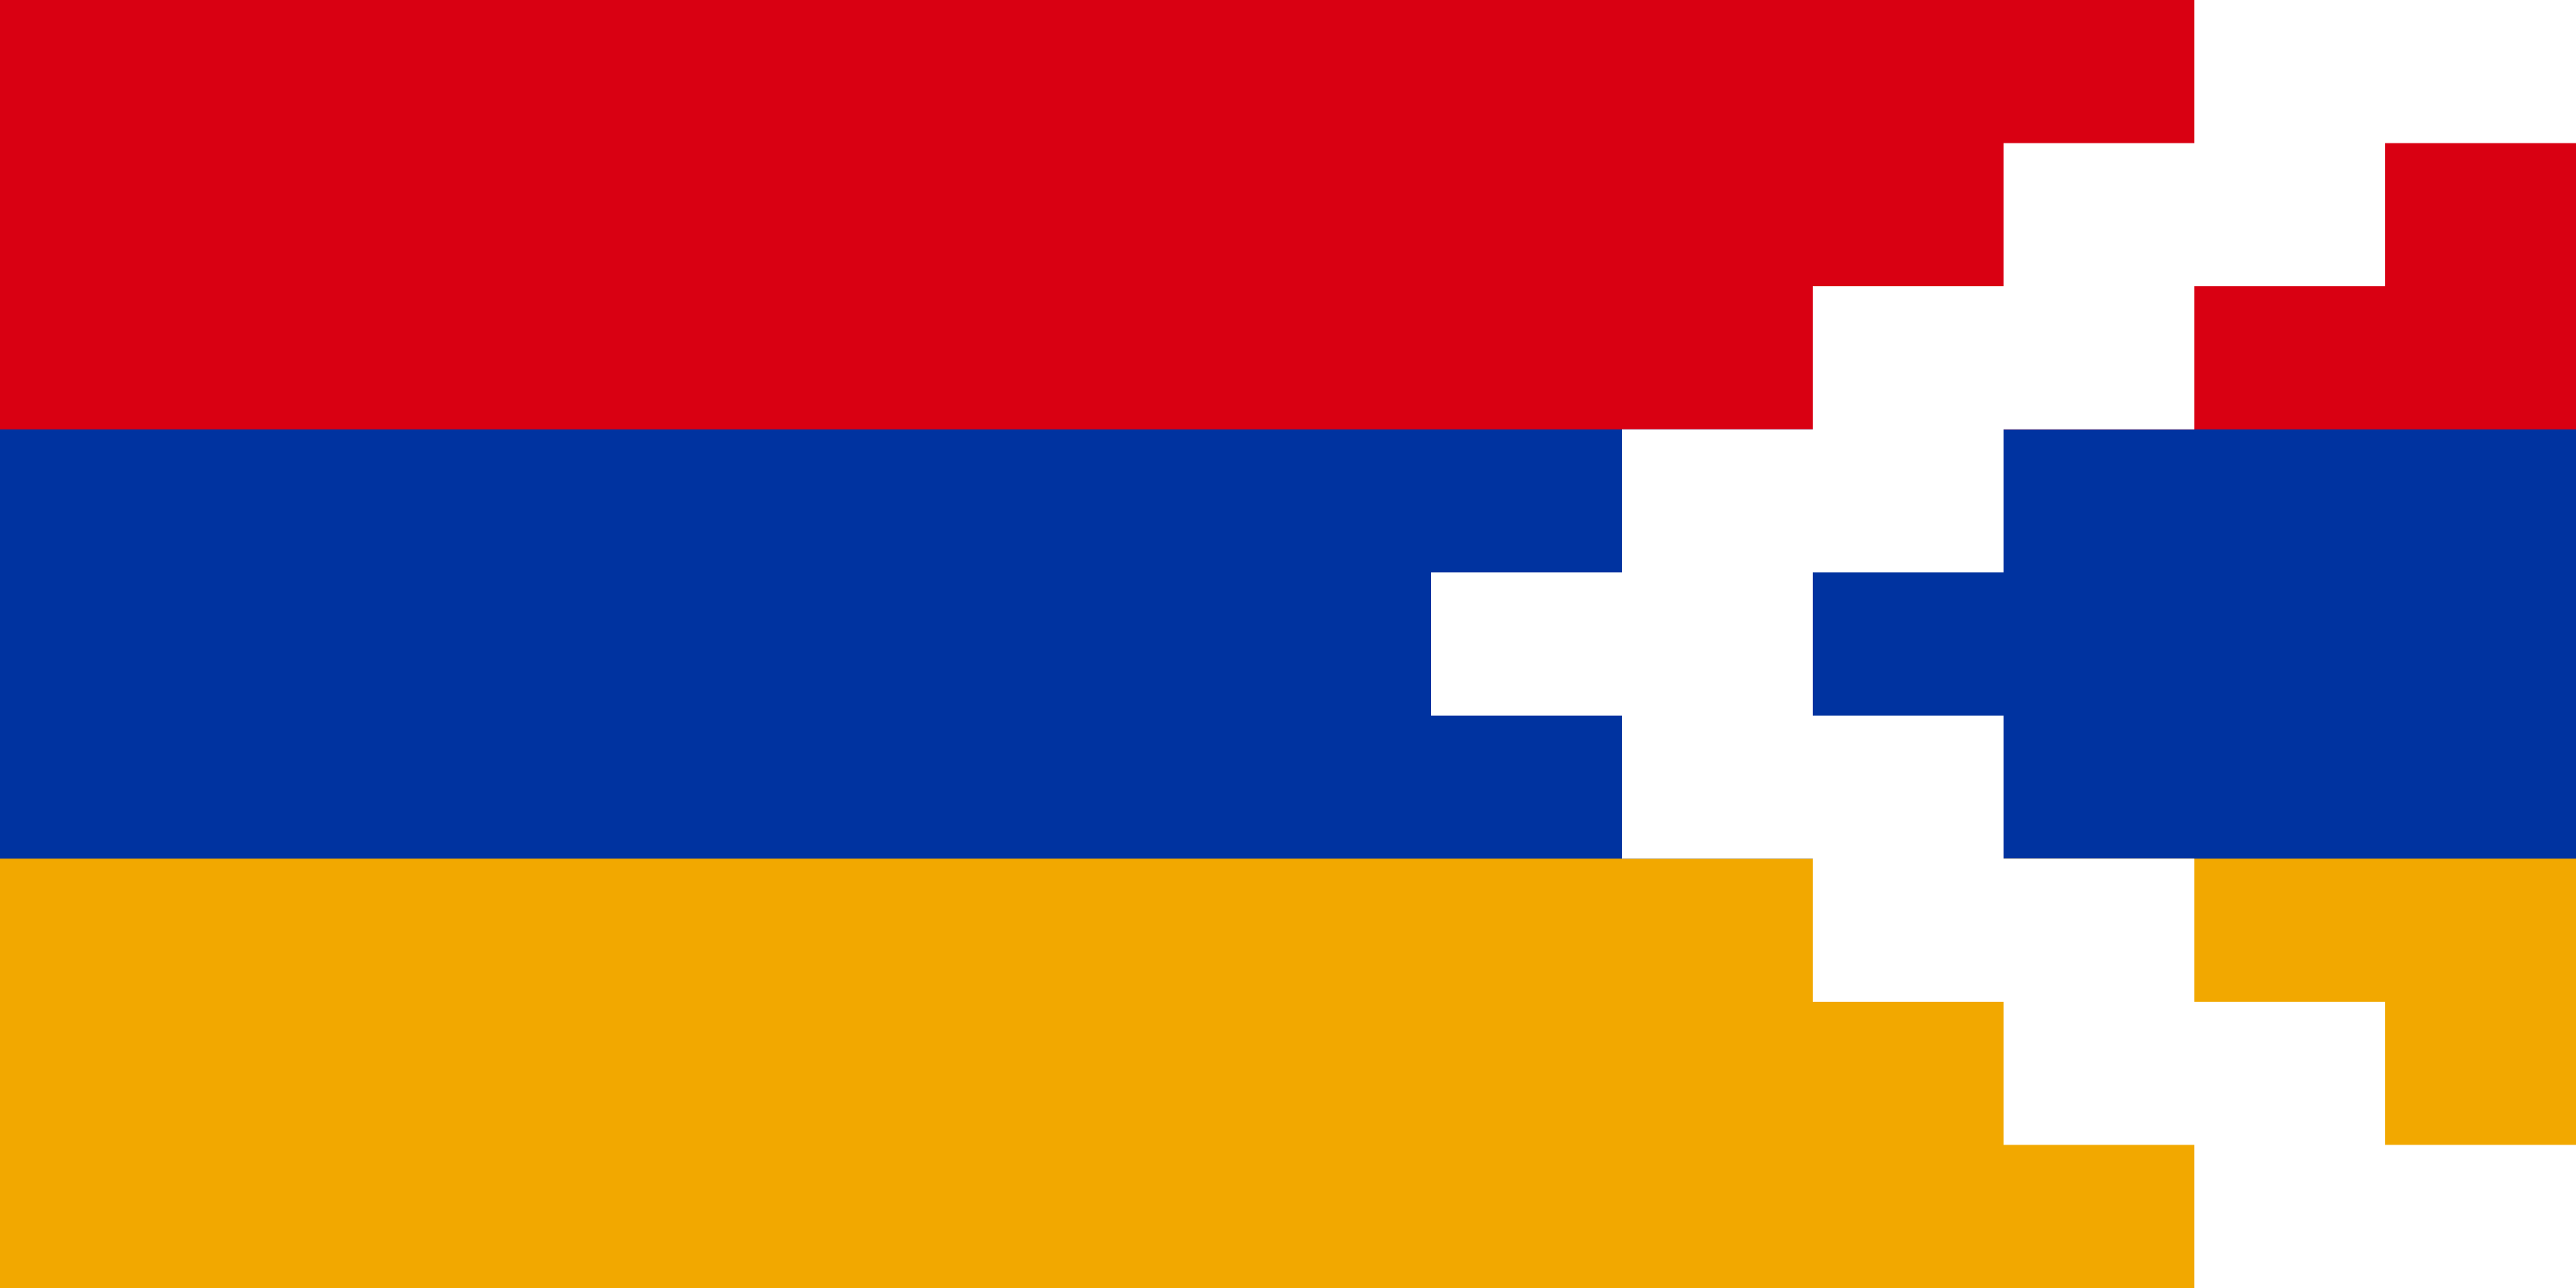 Artsakh Flag Image - Free Download